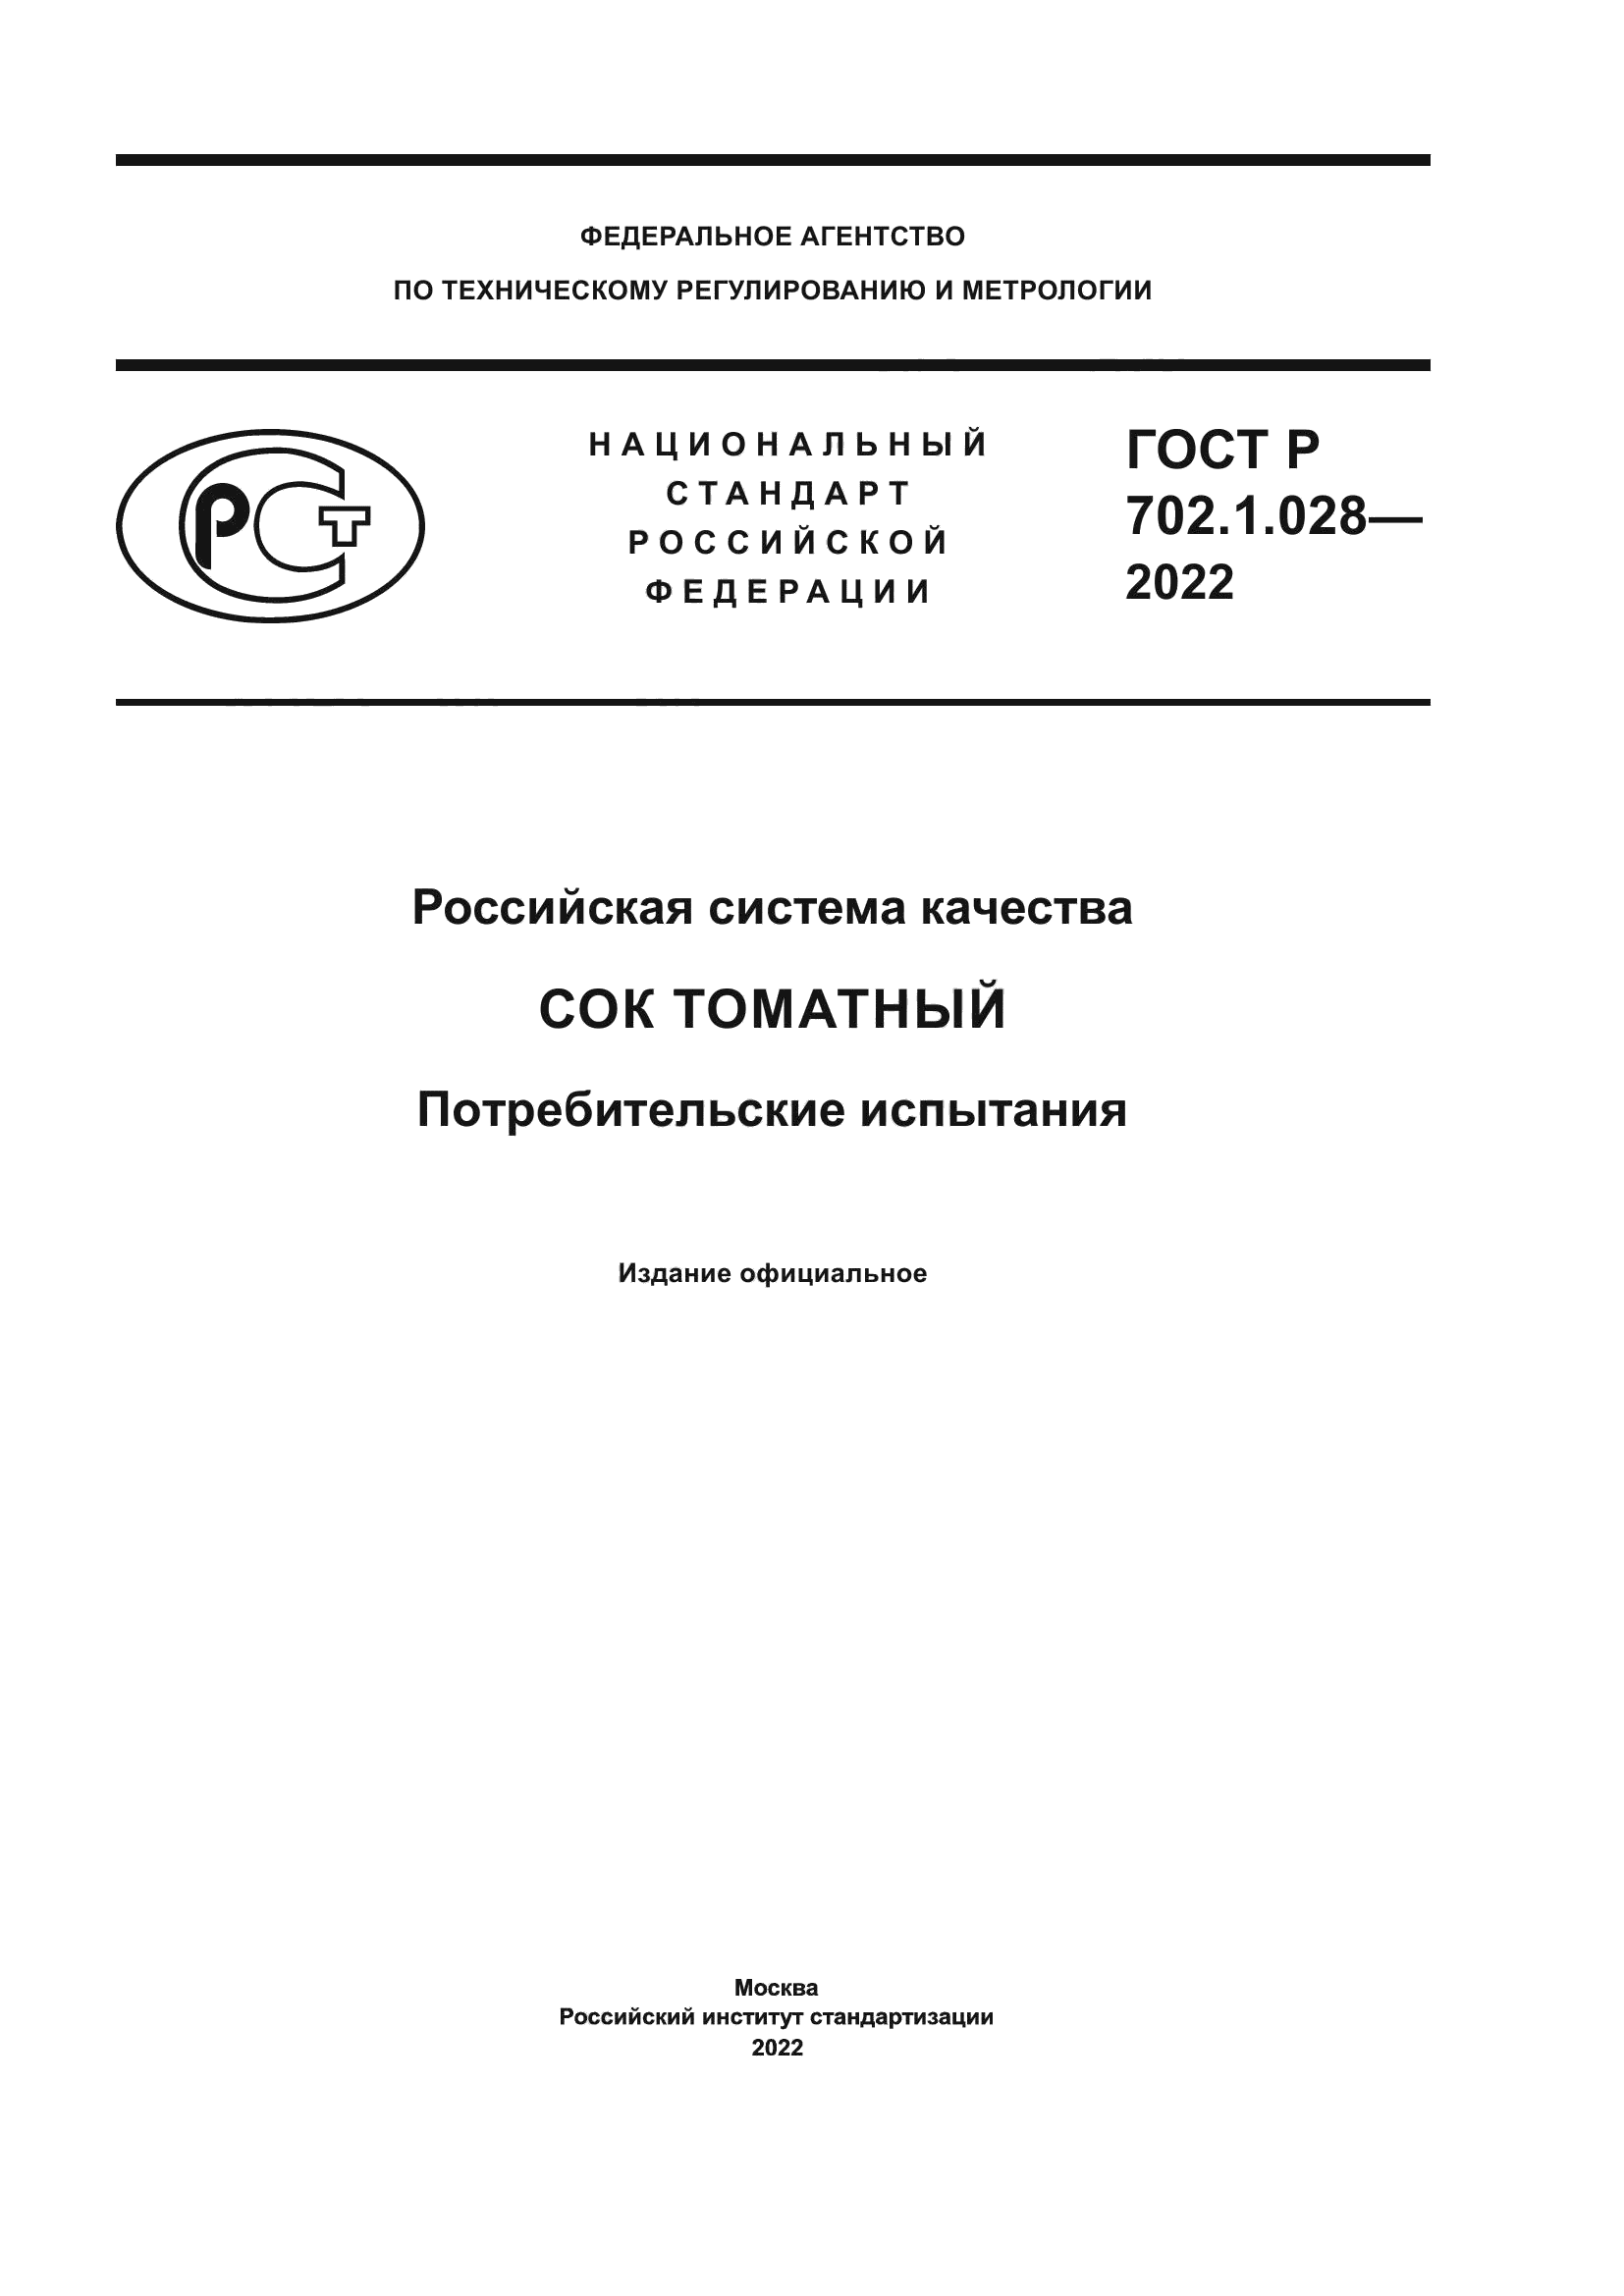 ГОСТ Р 702.1.028-2022